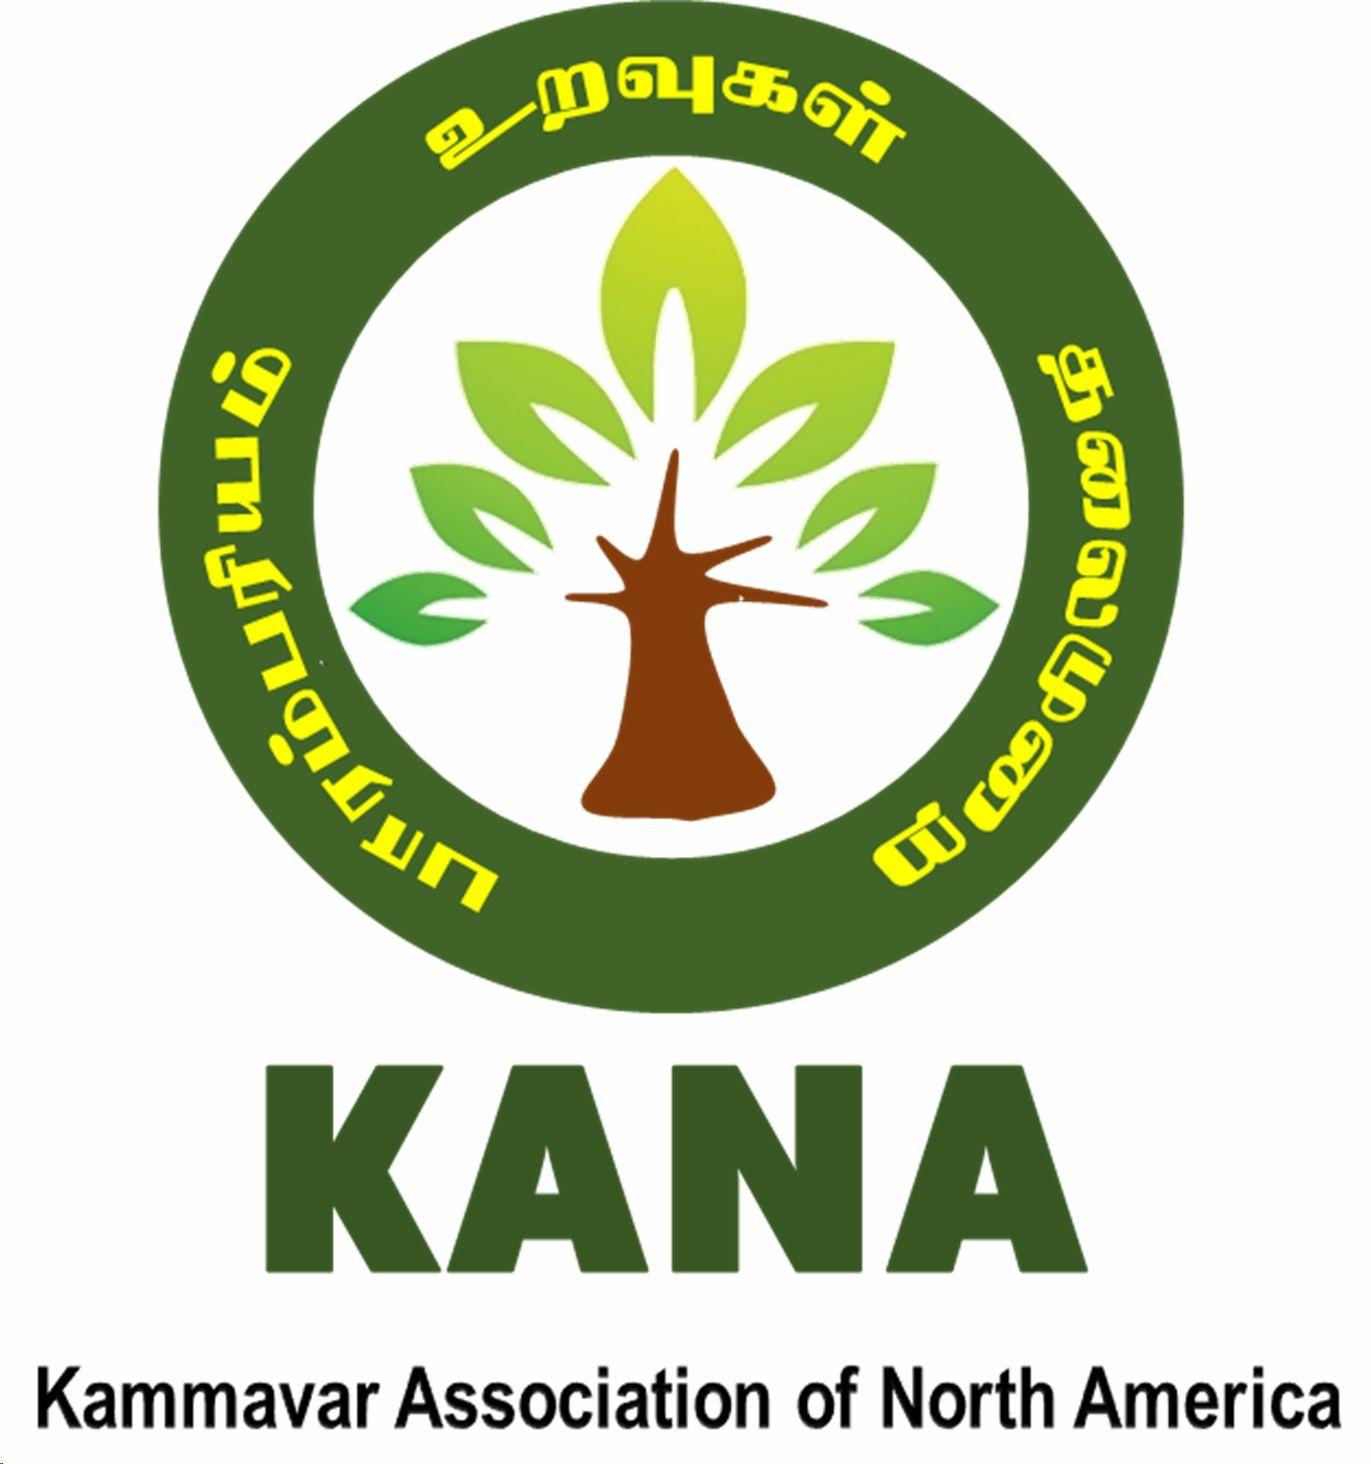 Kana Logo - Kammavar Association of North America (KANA). Our Community, Our